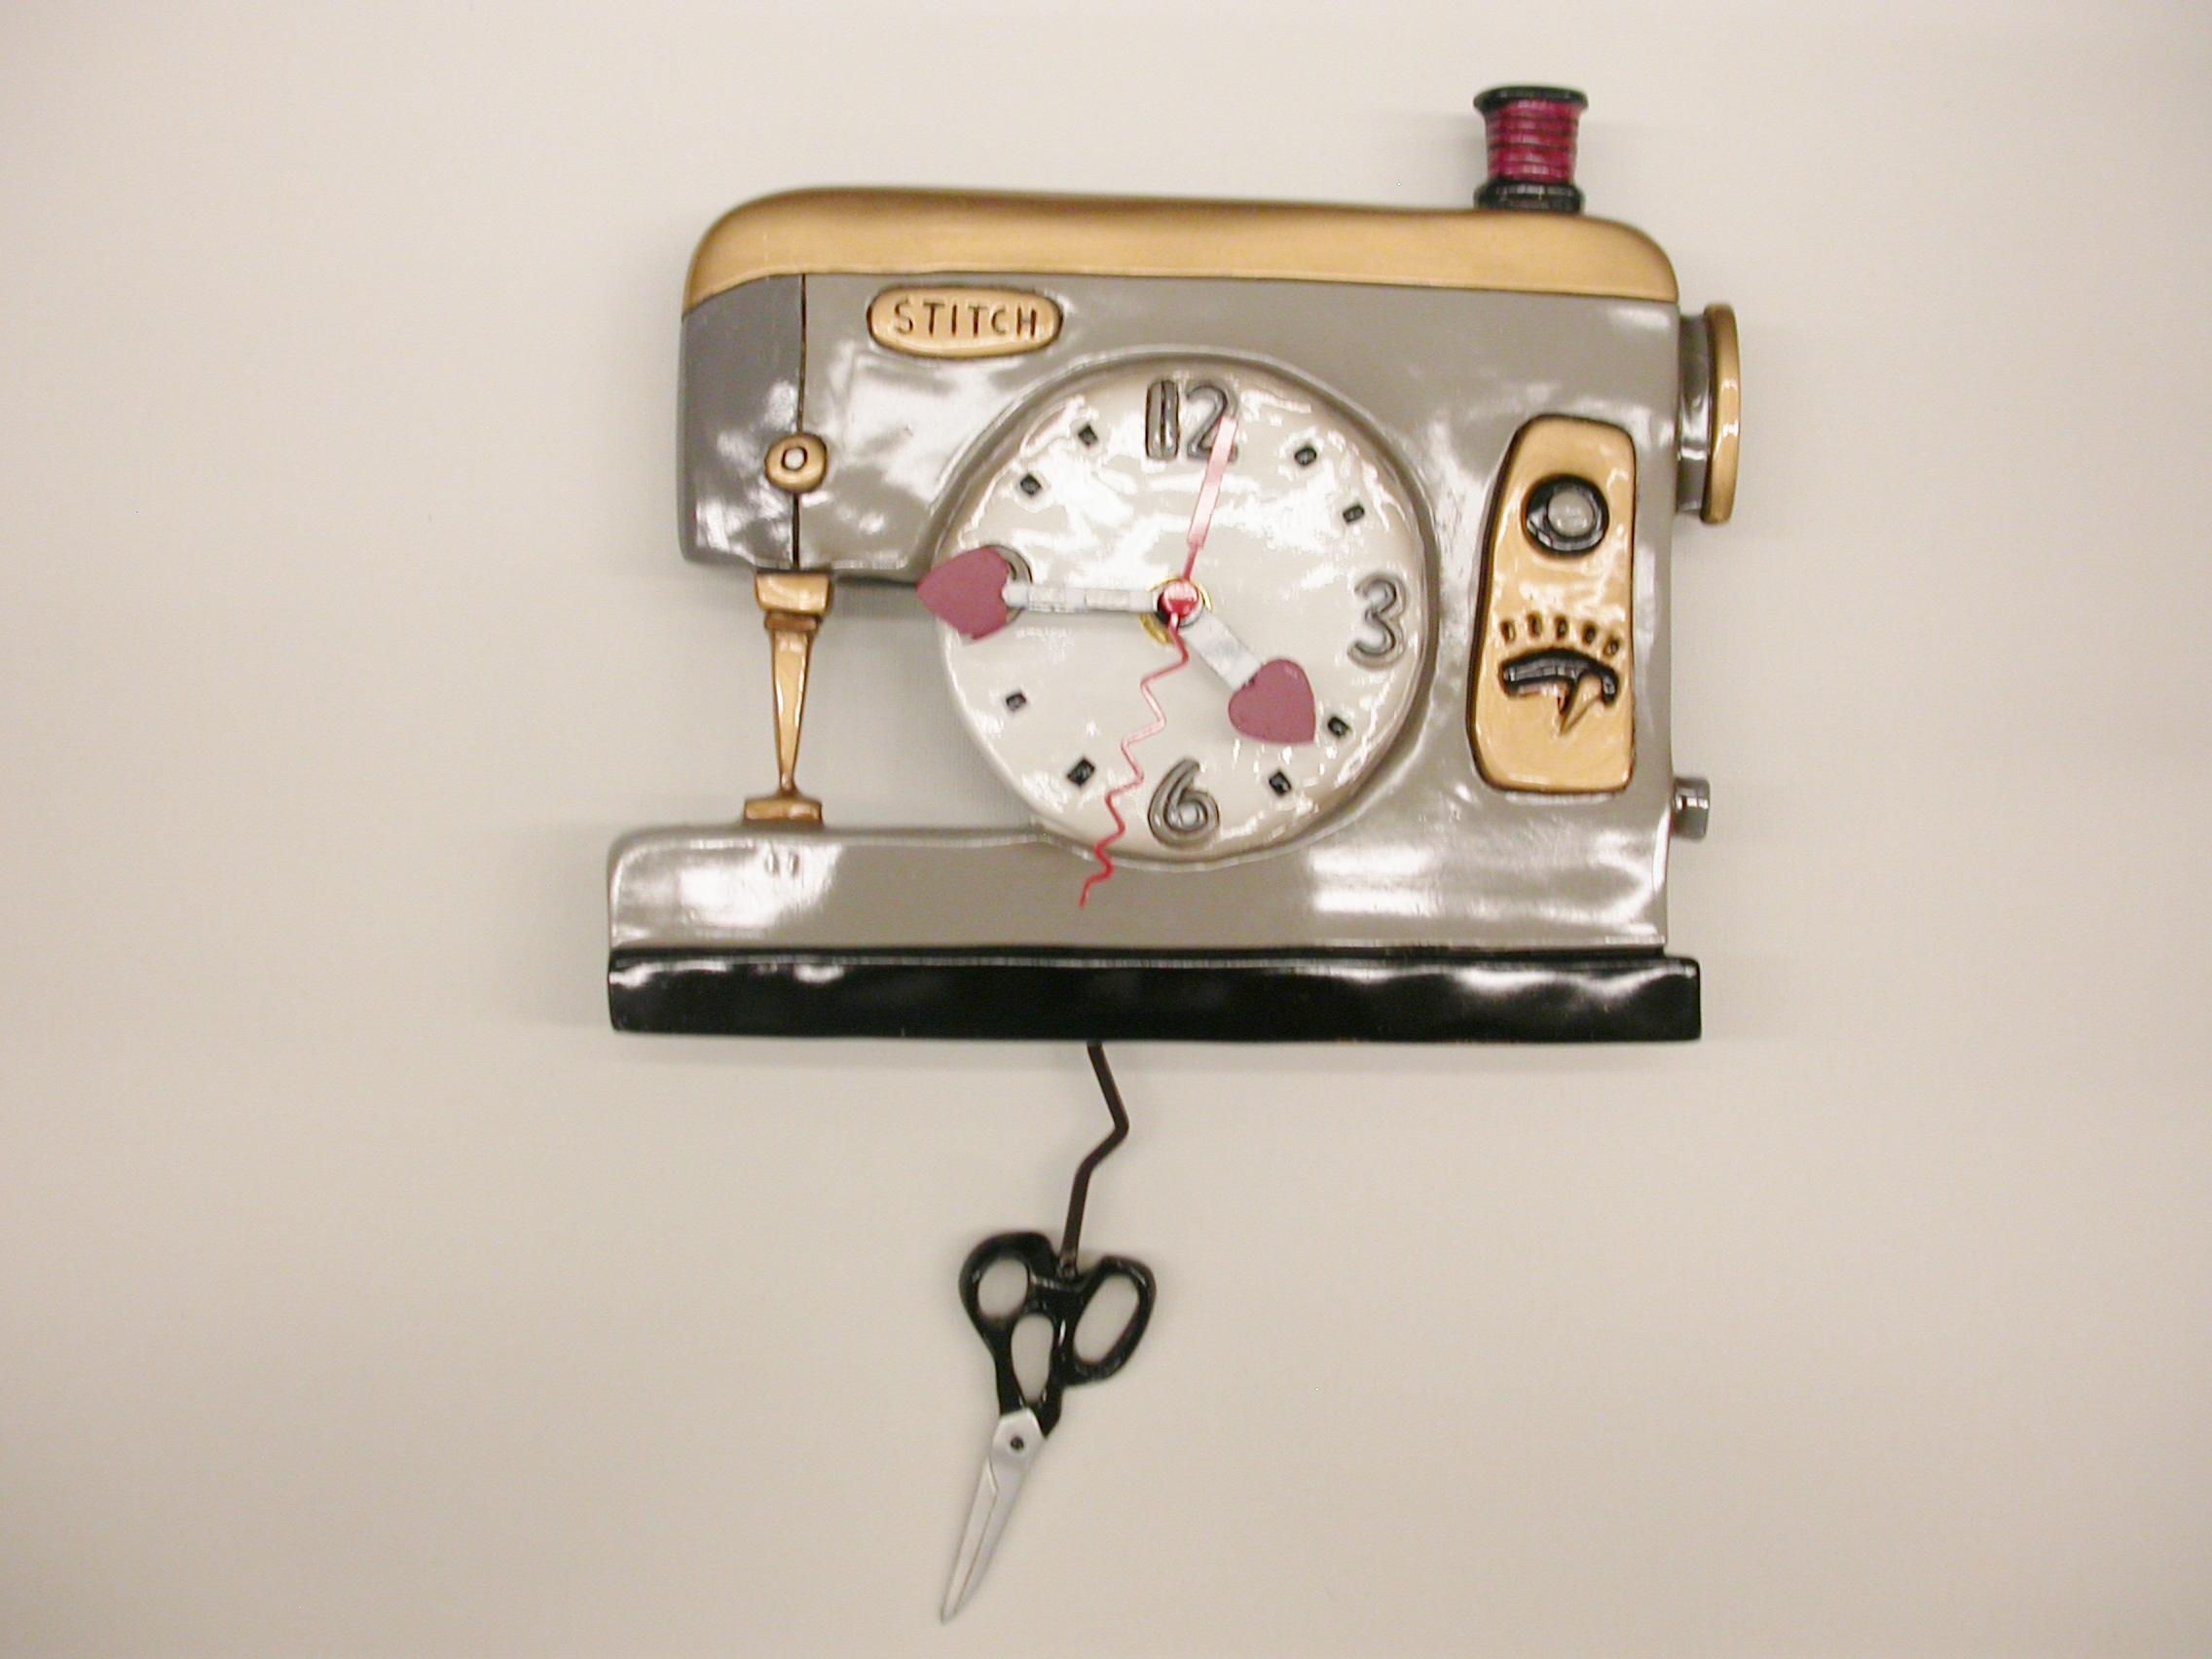 Back Stitch Sewing Pendulum Wall Clock by Allen Designs